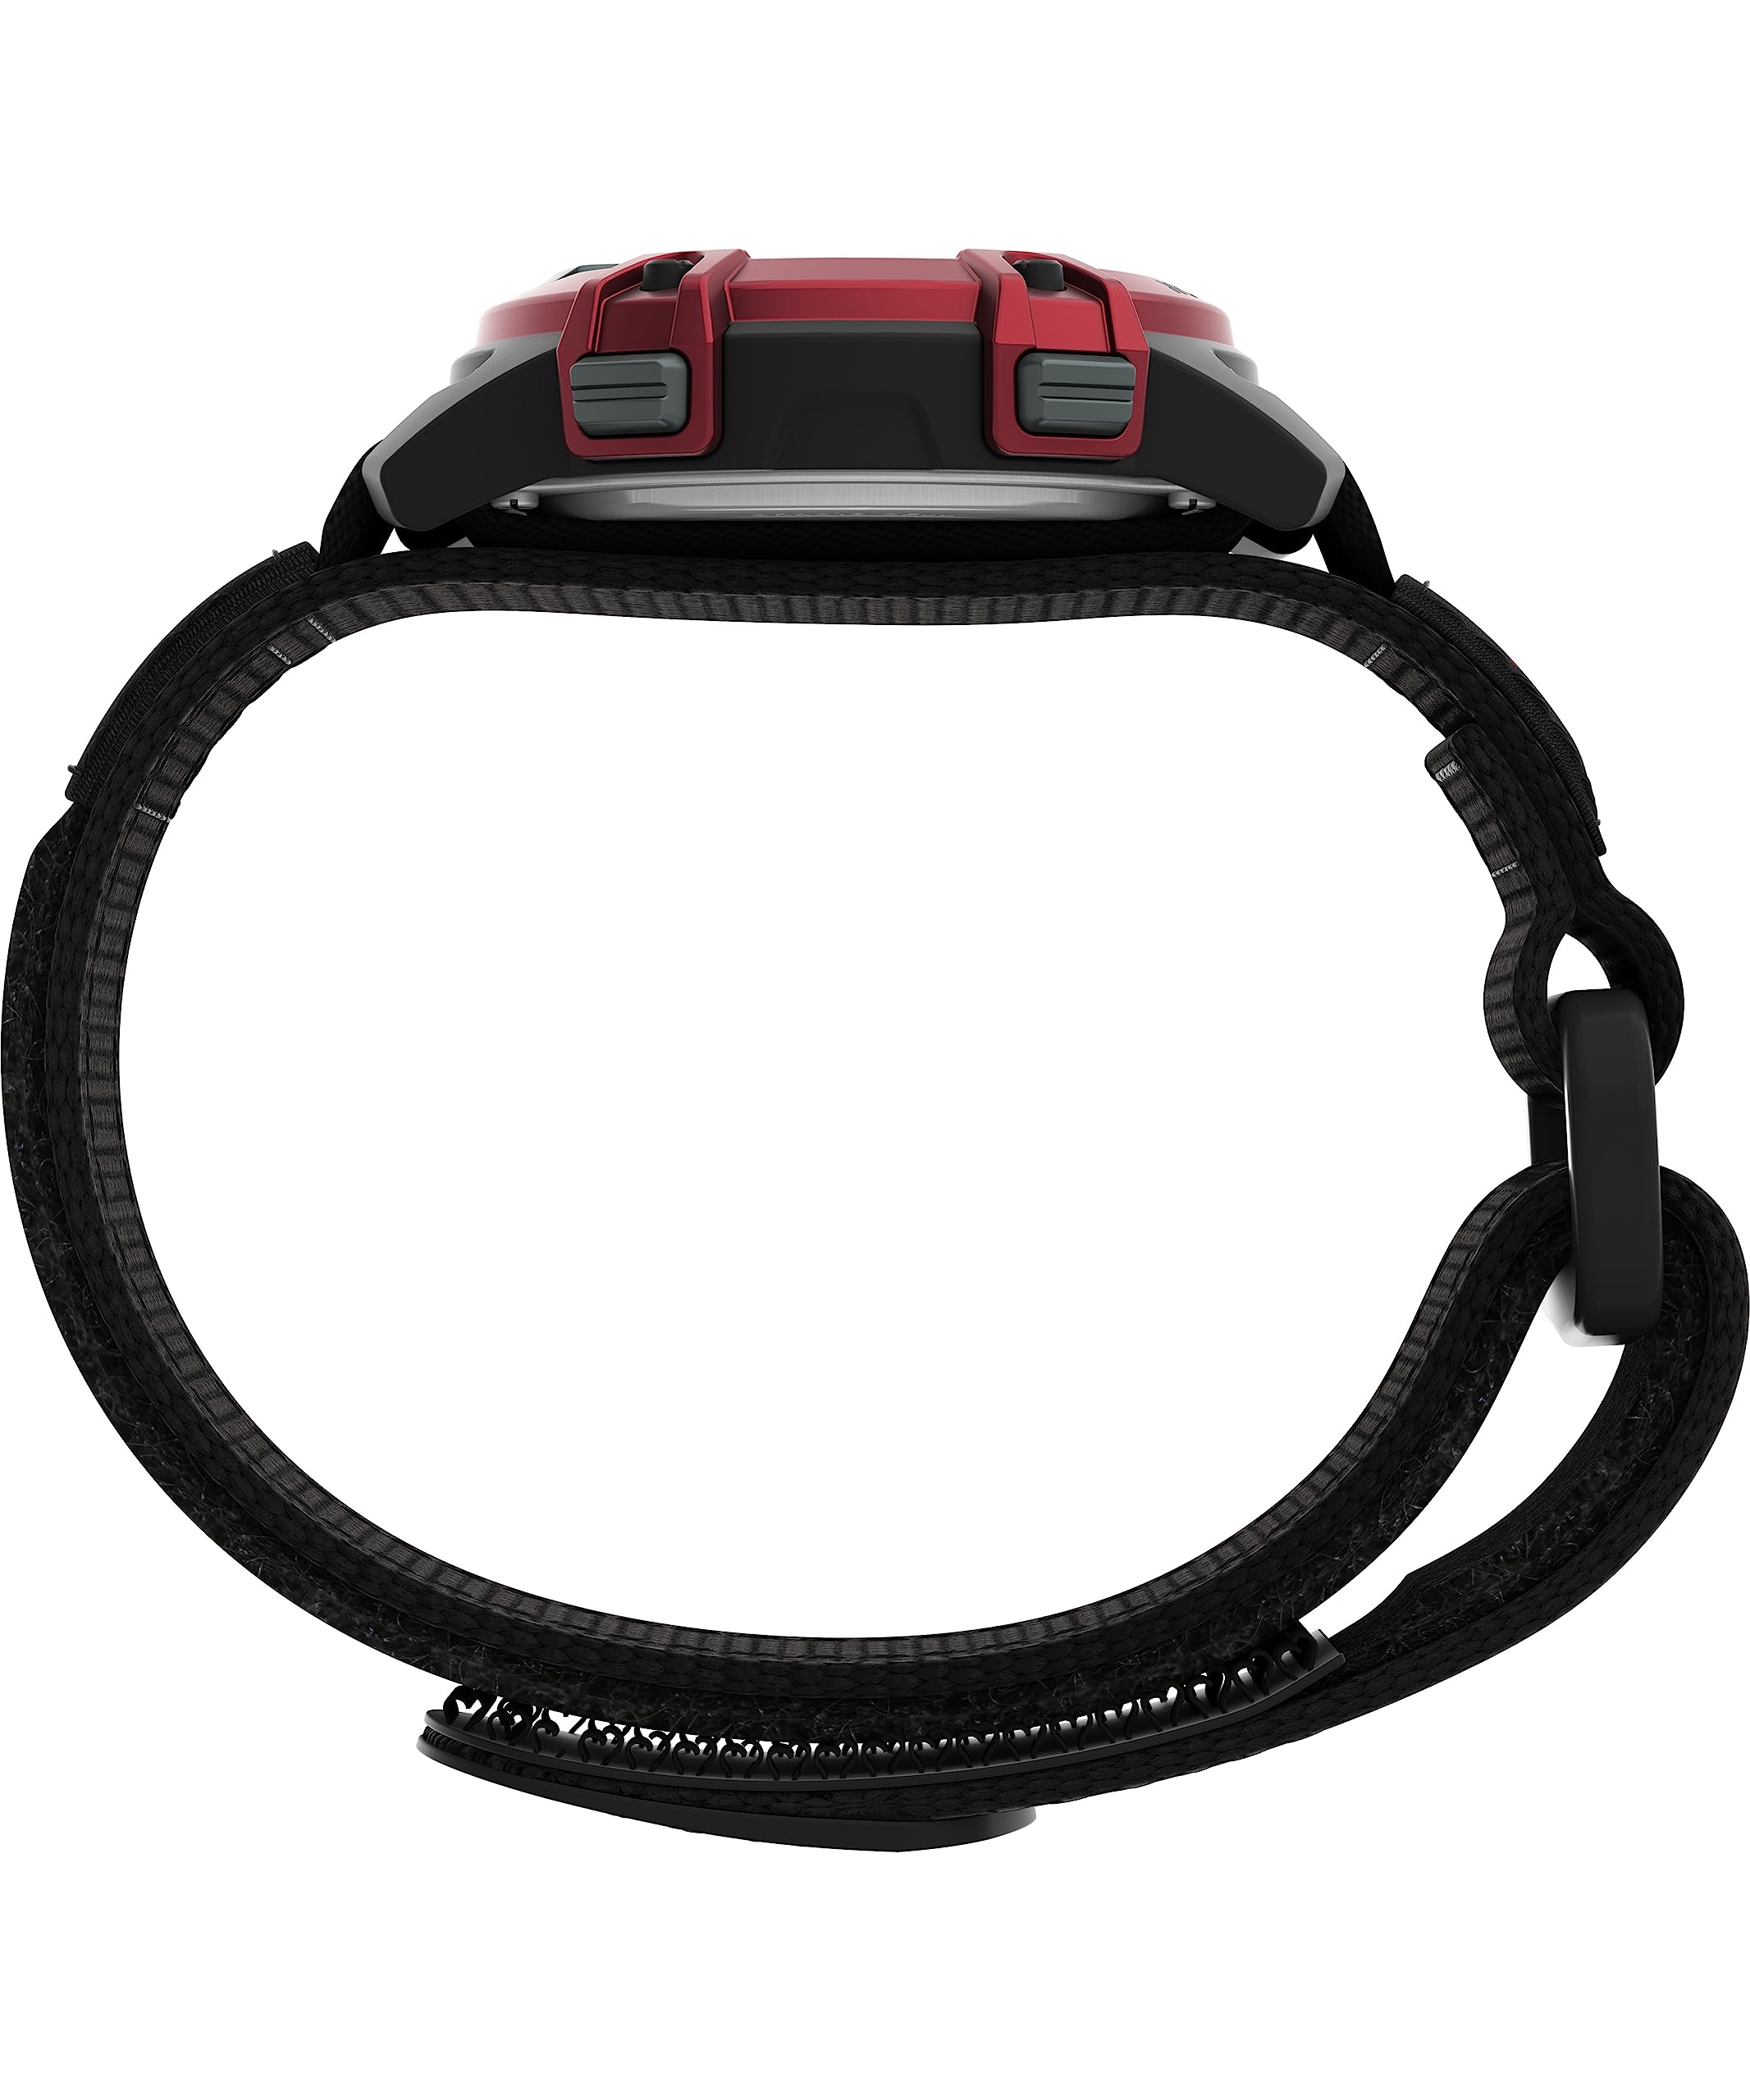 Timex Unisex Expedition CAT 33mm Watch - Black Fastwrap Digital Dial Black Case